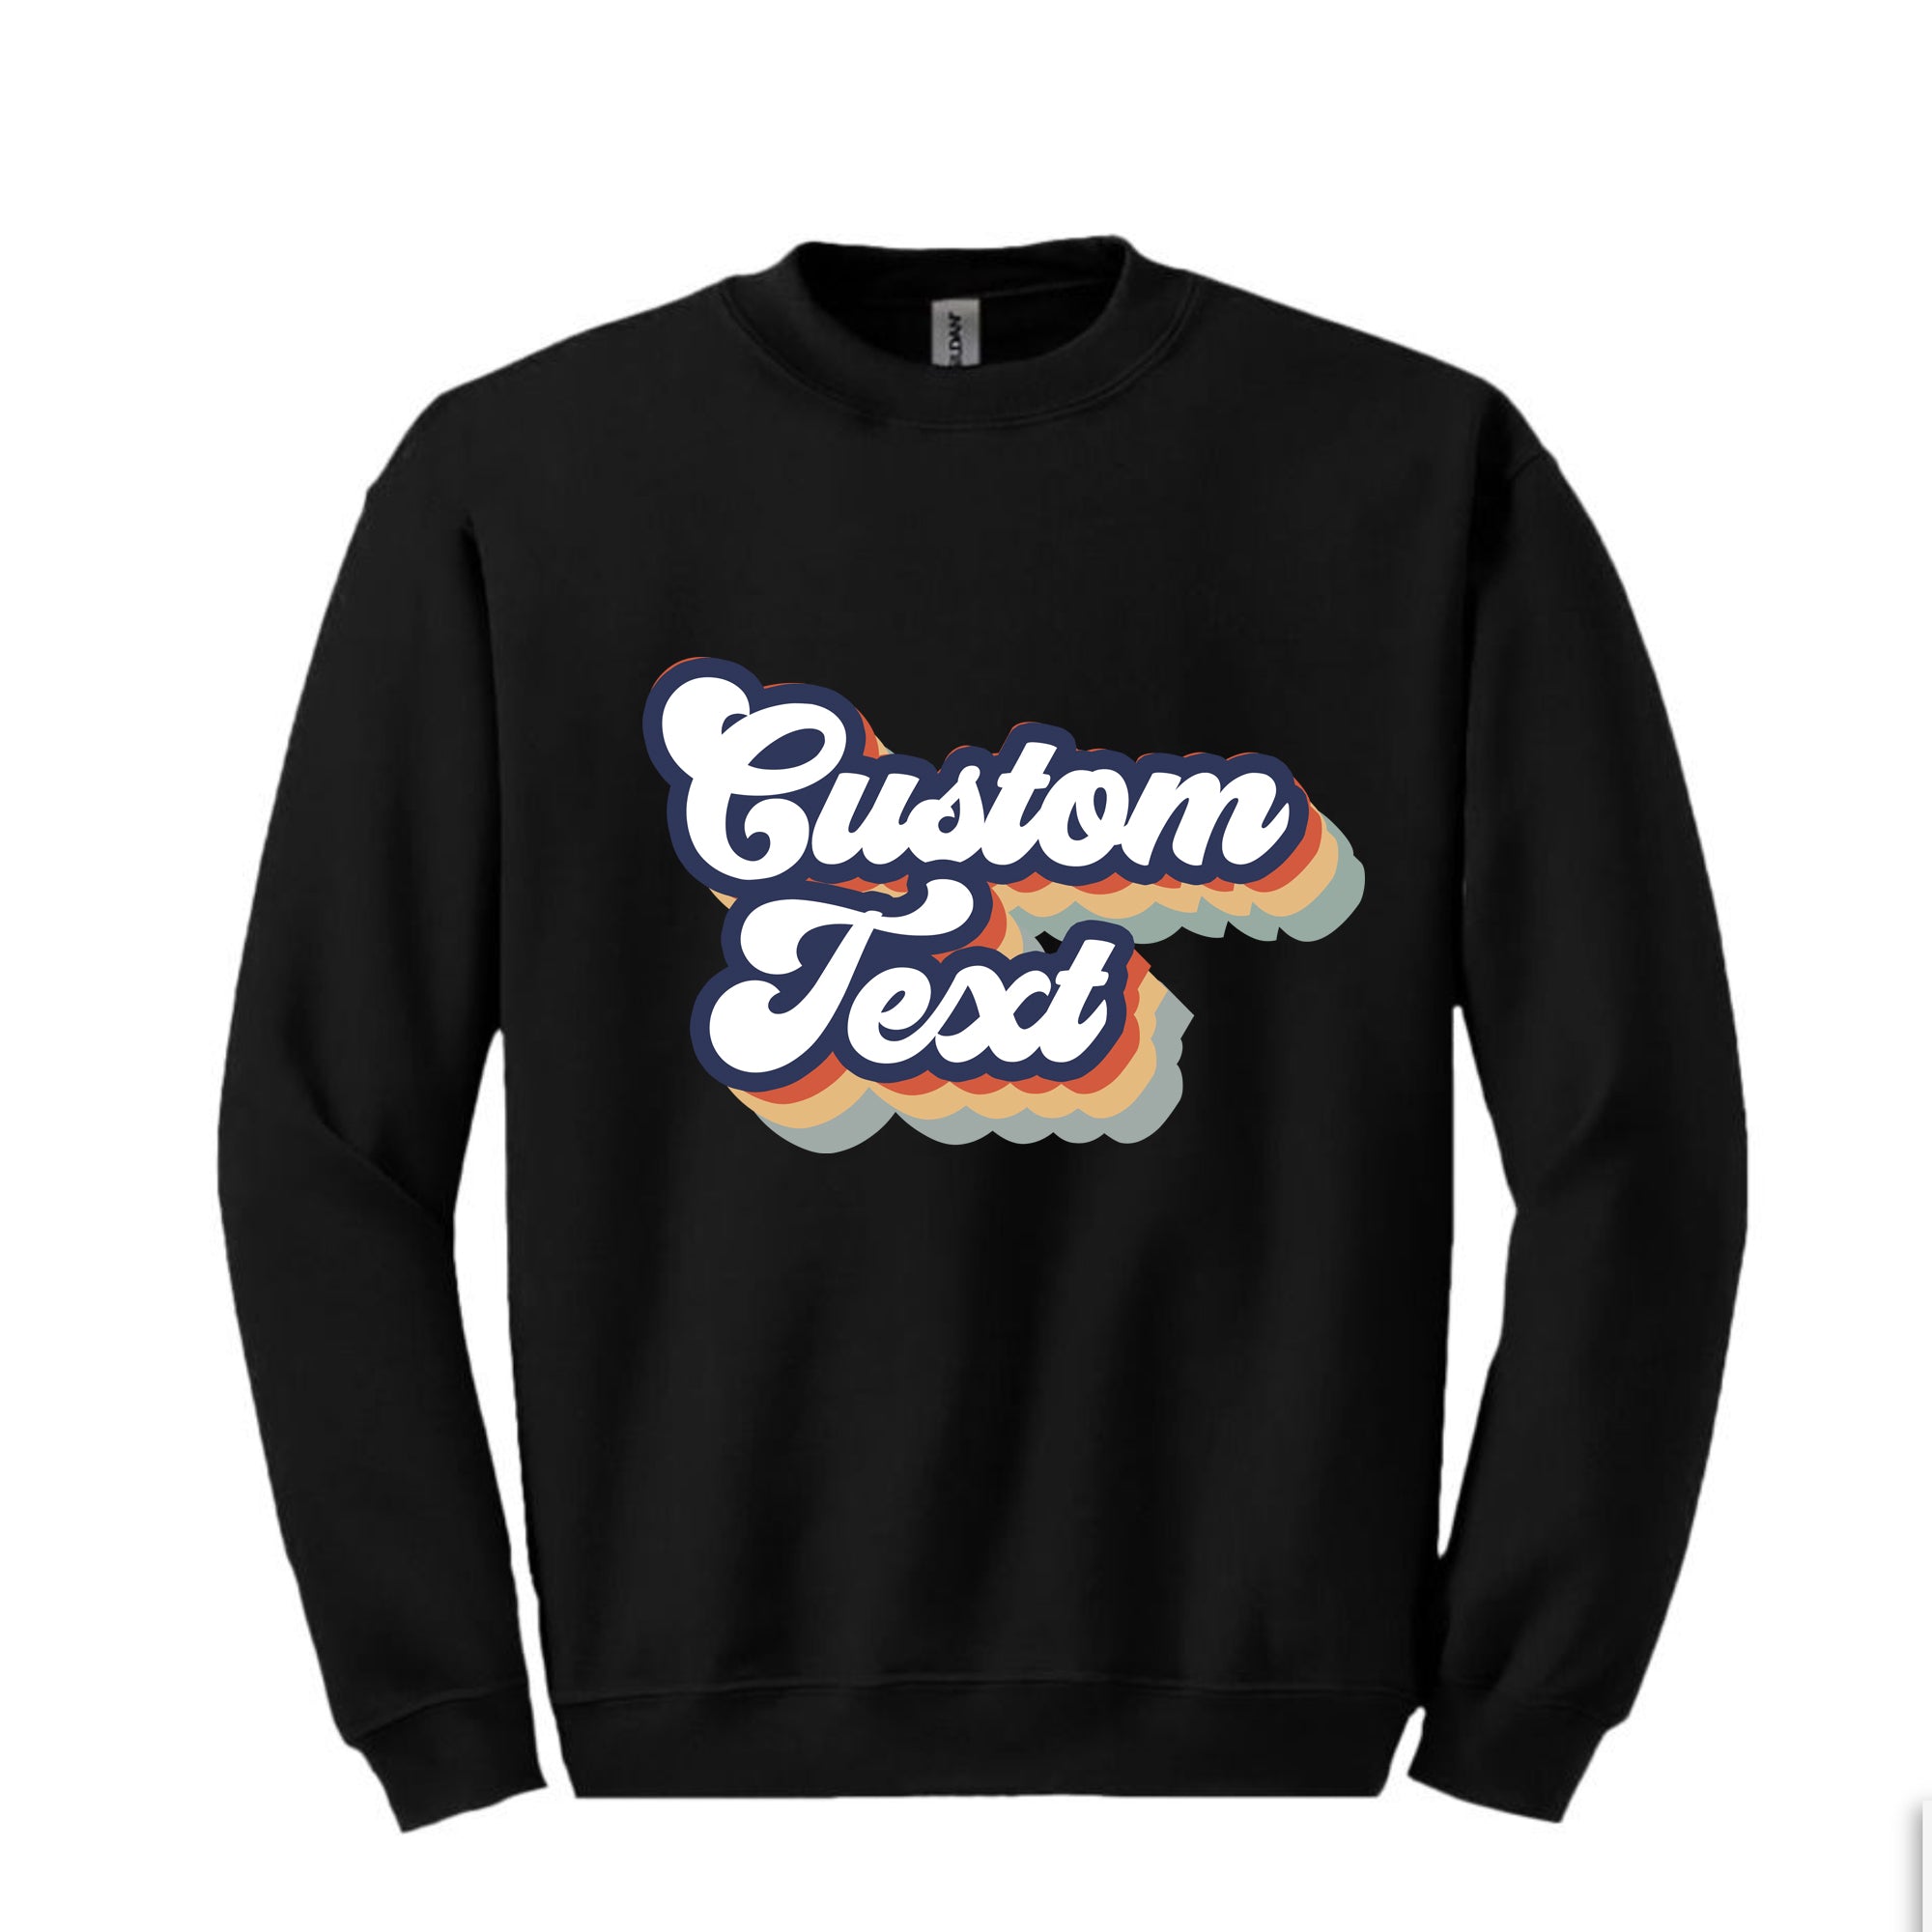 Custom Adult Crew Neck Sweatshirt - BLACK